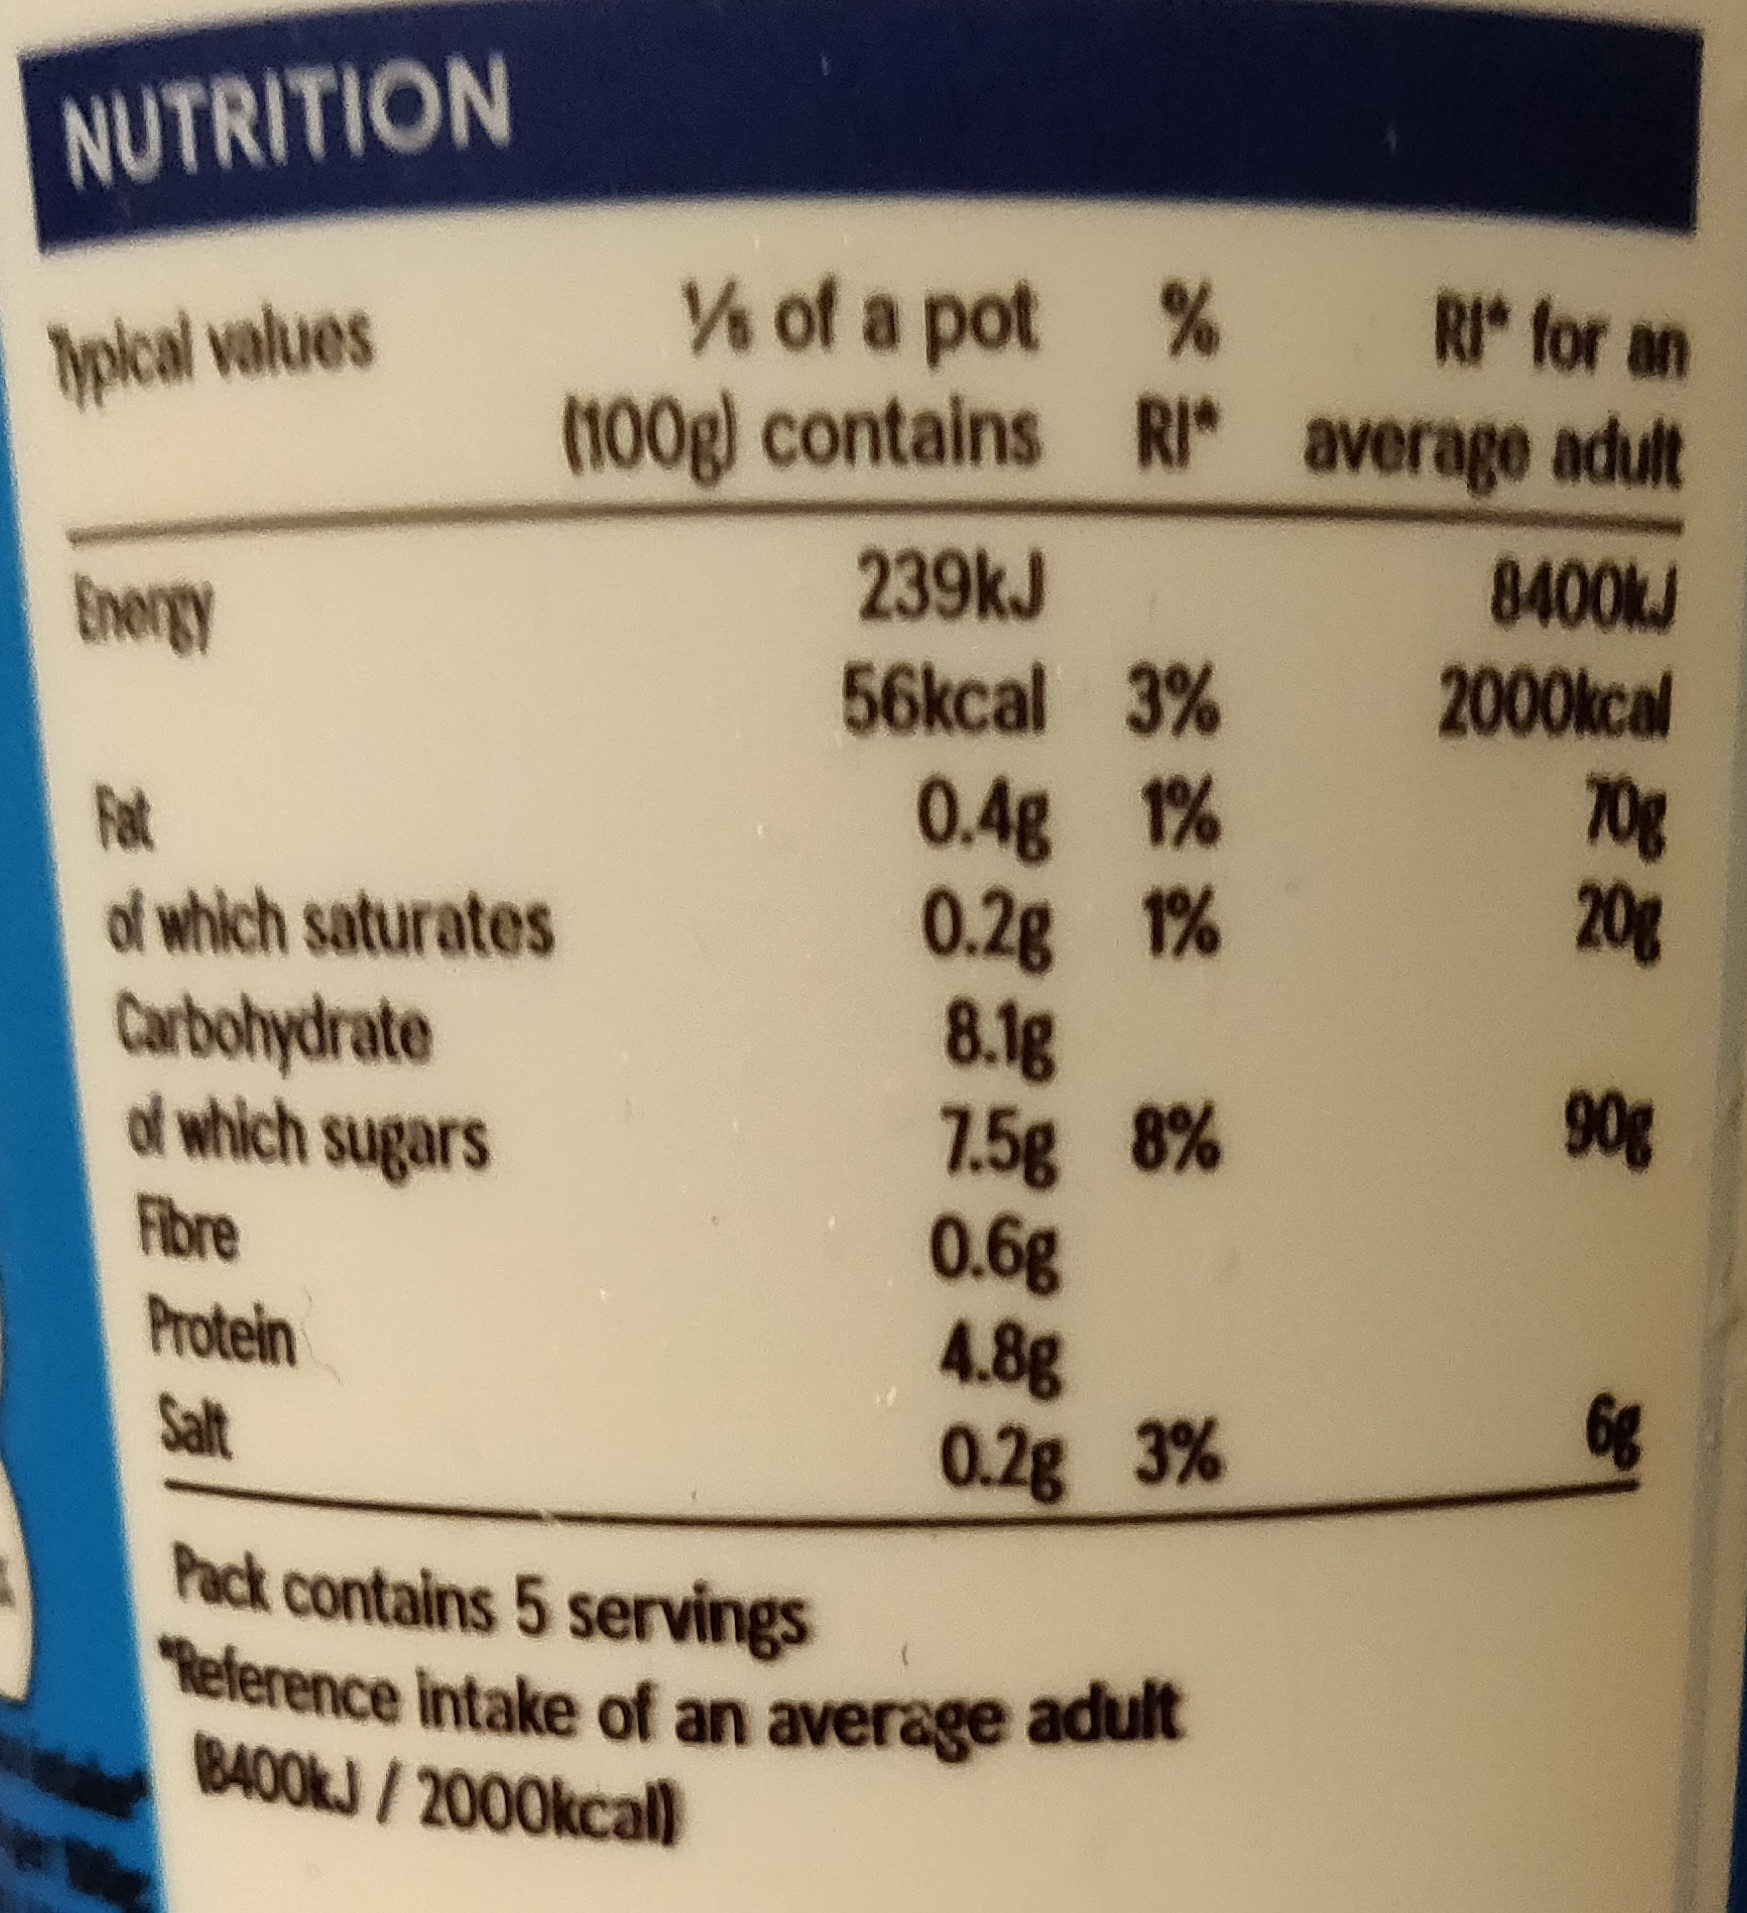 Irish fat free natural yogurt - Nutrition facts